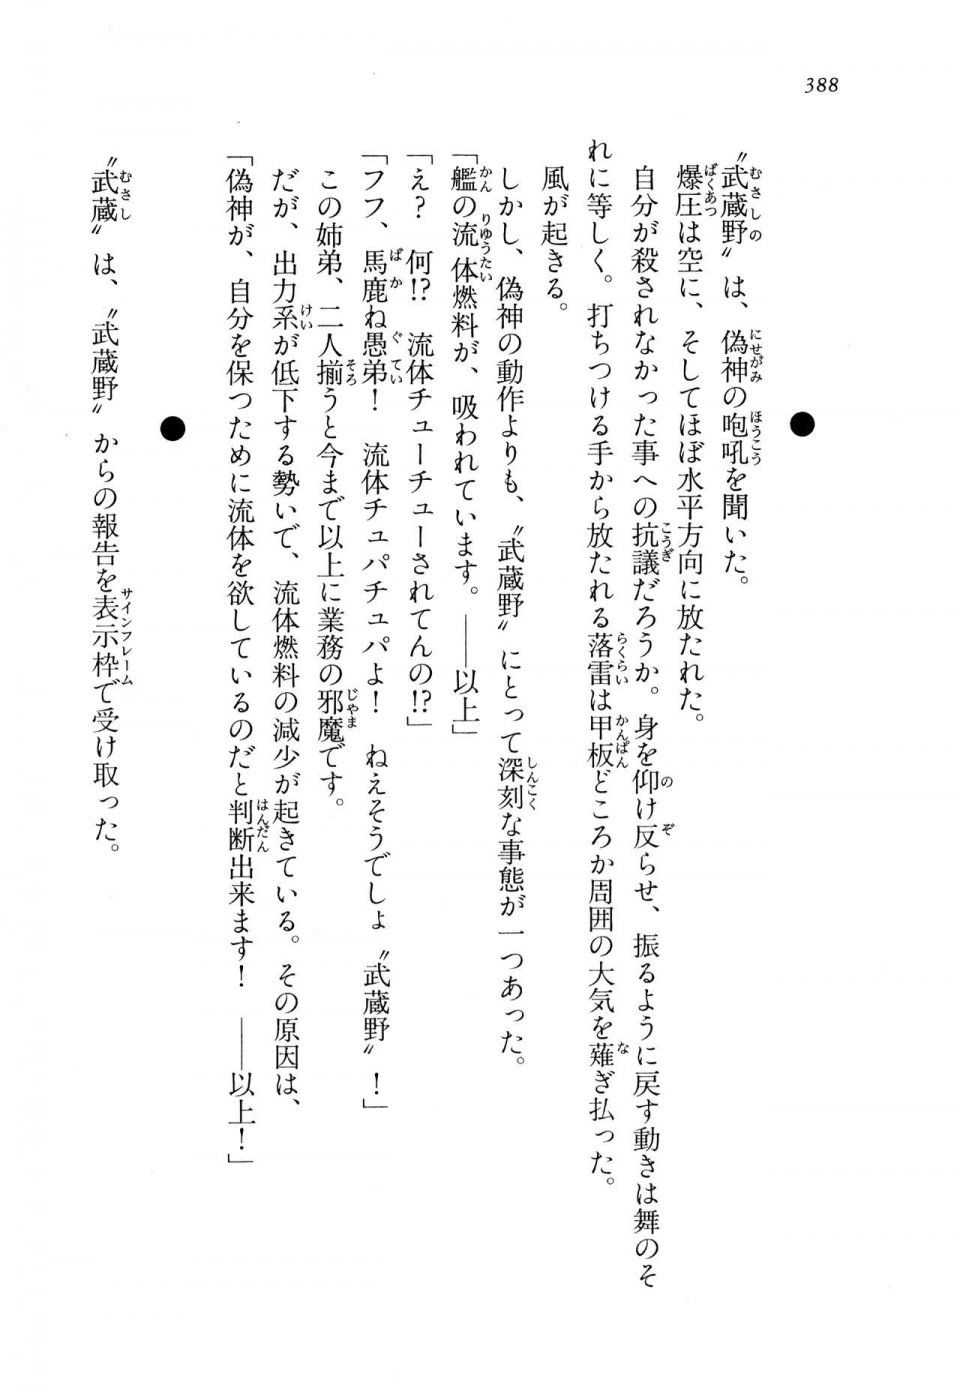 Kyoukai Senjou no Horizon BD Special Mininovel Vol 8(4B) - Photo #392